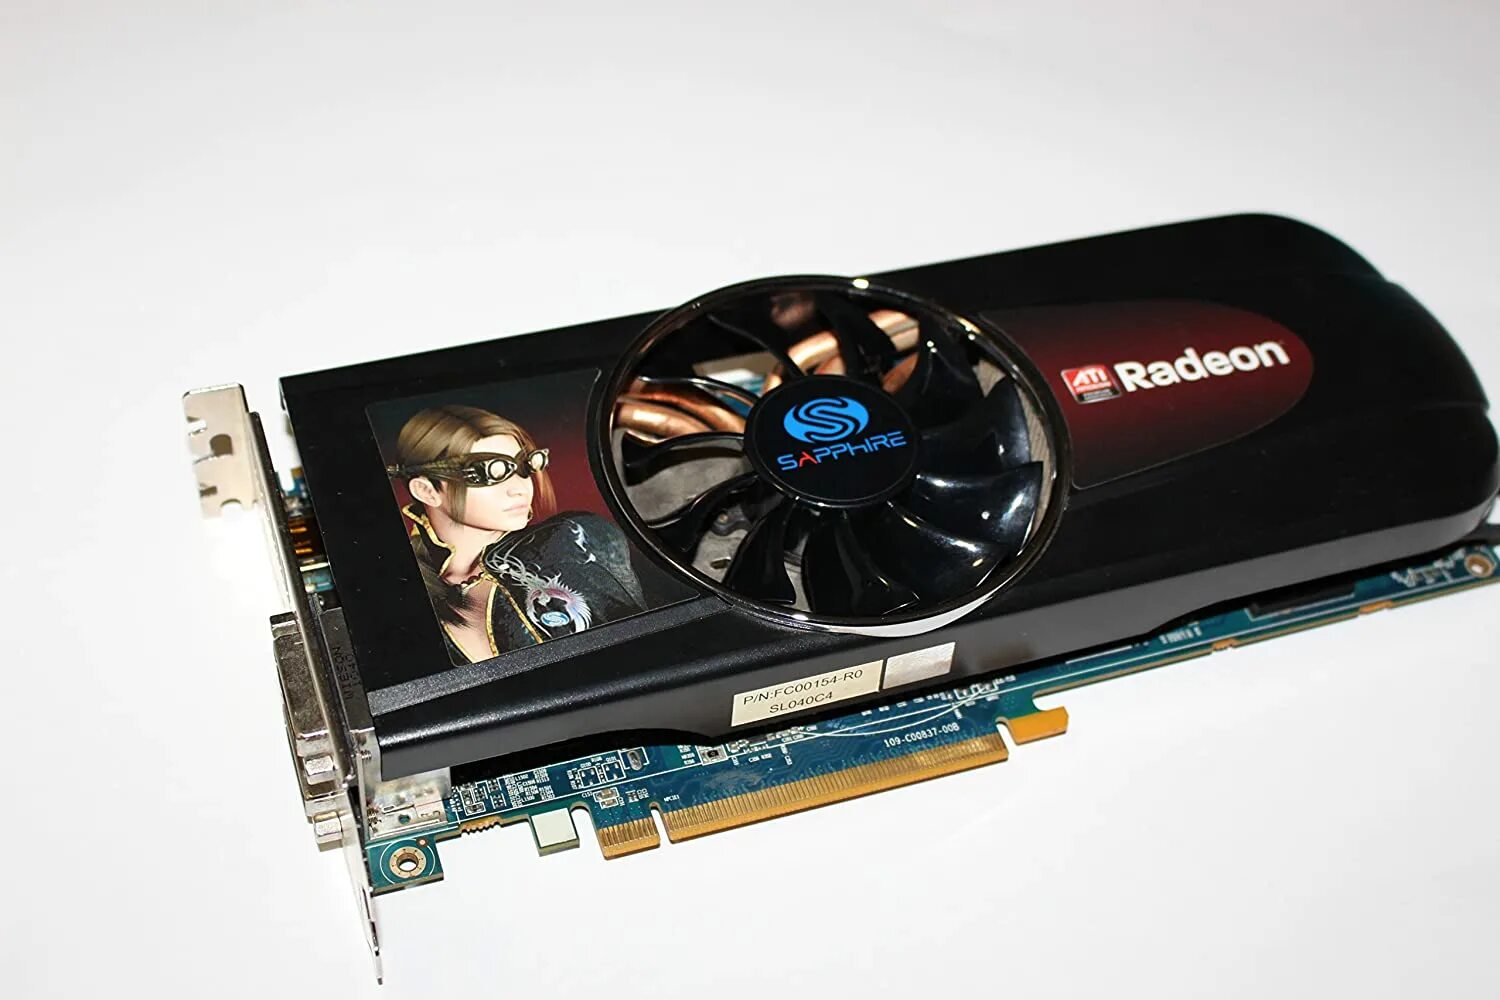 Ati radeon series. AMD Radeon HD 5870. AMD Radeon HD 5870 Series. AMD Radeon HD 5800 Series. AMD Radeon HD 6550m 1gb.